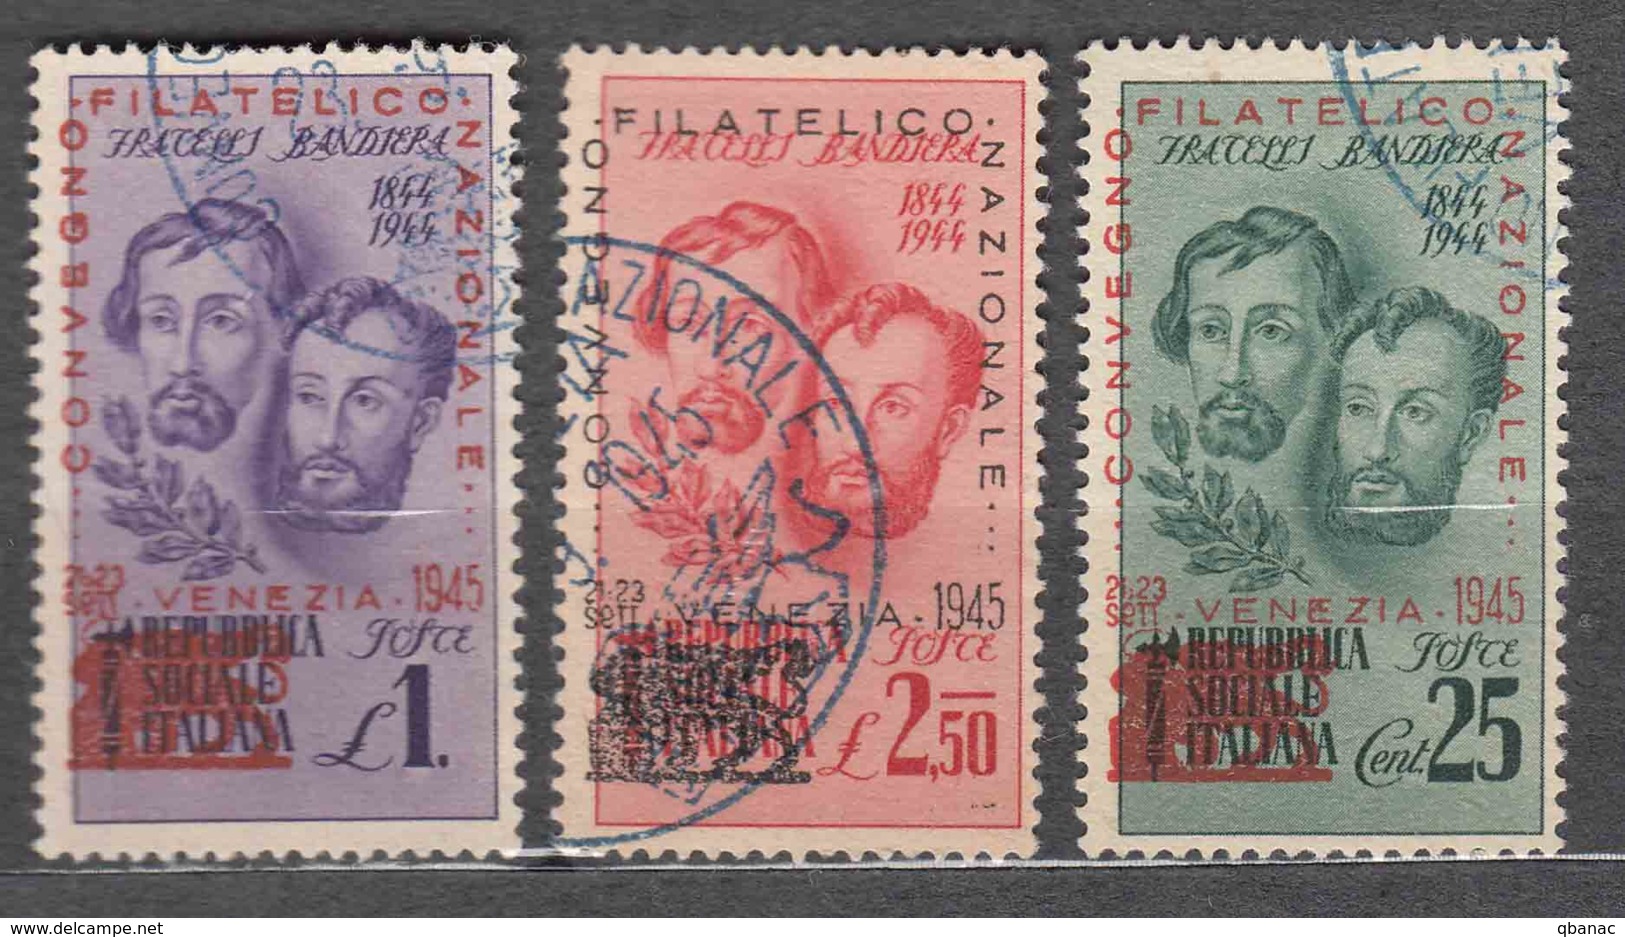 Italy 1945, Philatelic Exibition Venezia Stamps Overprint, Fratelli Bandiera, Used - Afgestempeld